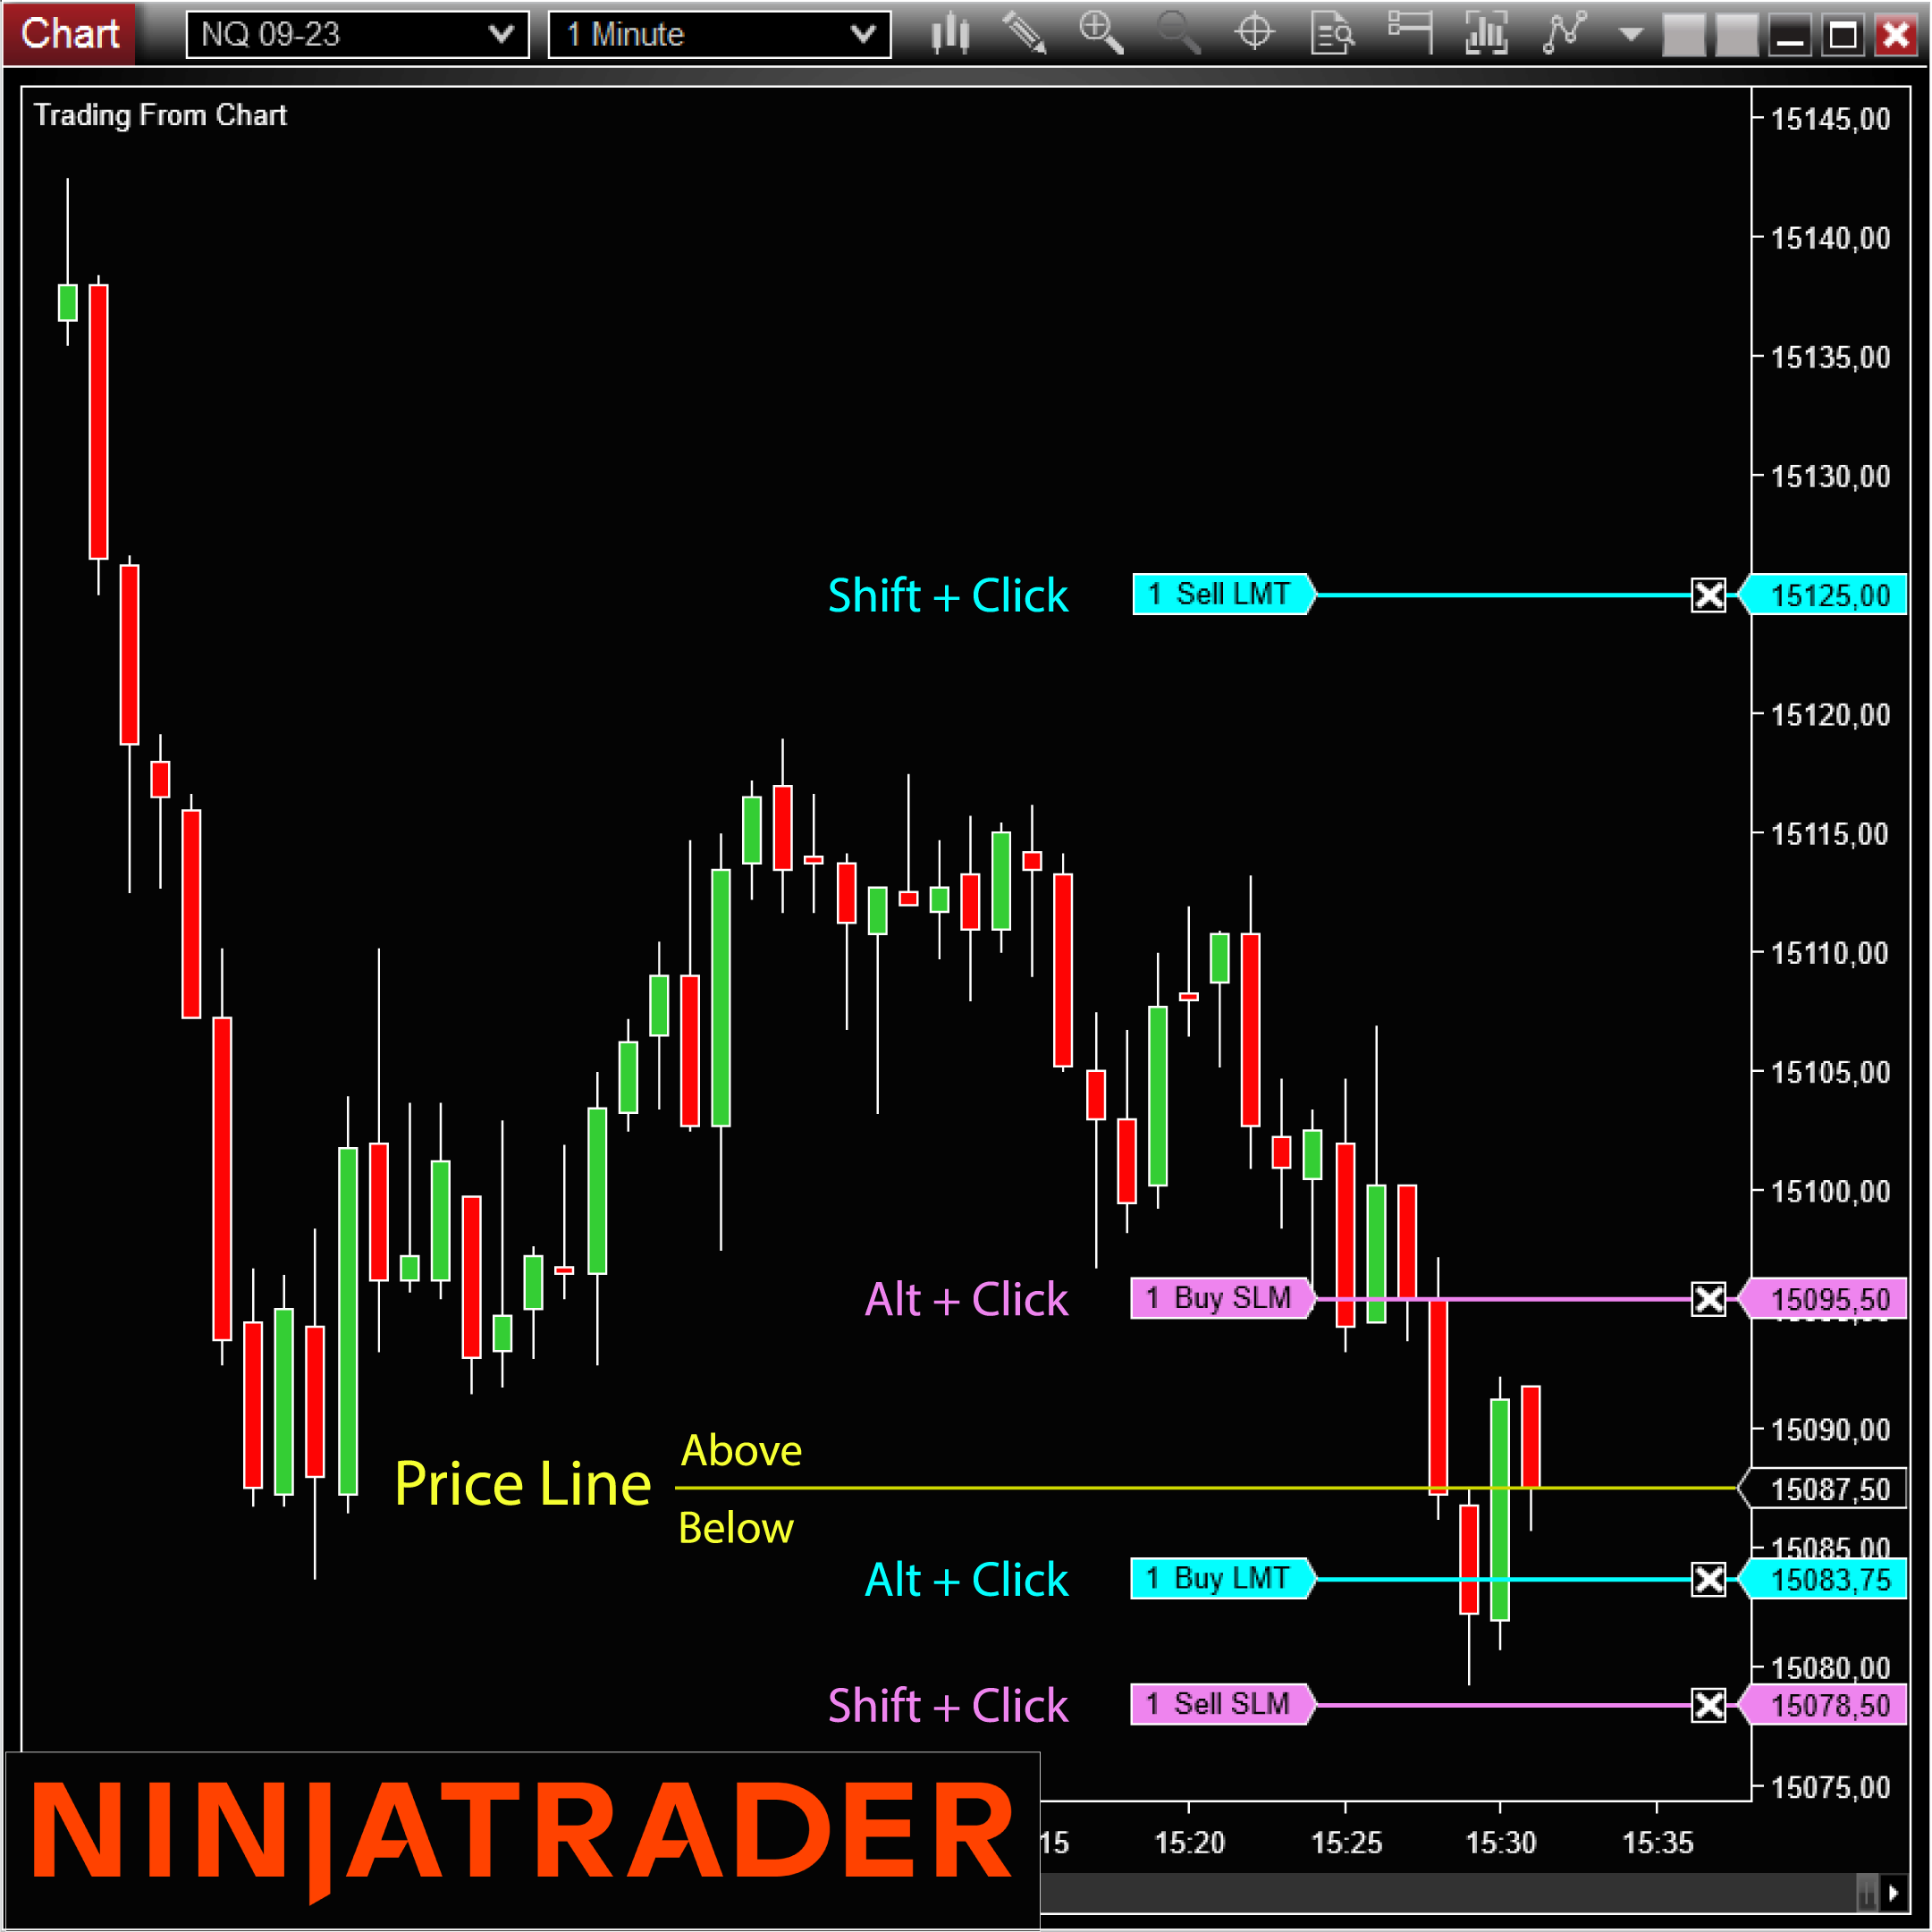 TradingFromChart-NinjaTrader-Indicator-Add-On-on-Trading-Strategy-1080x1080